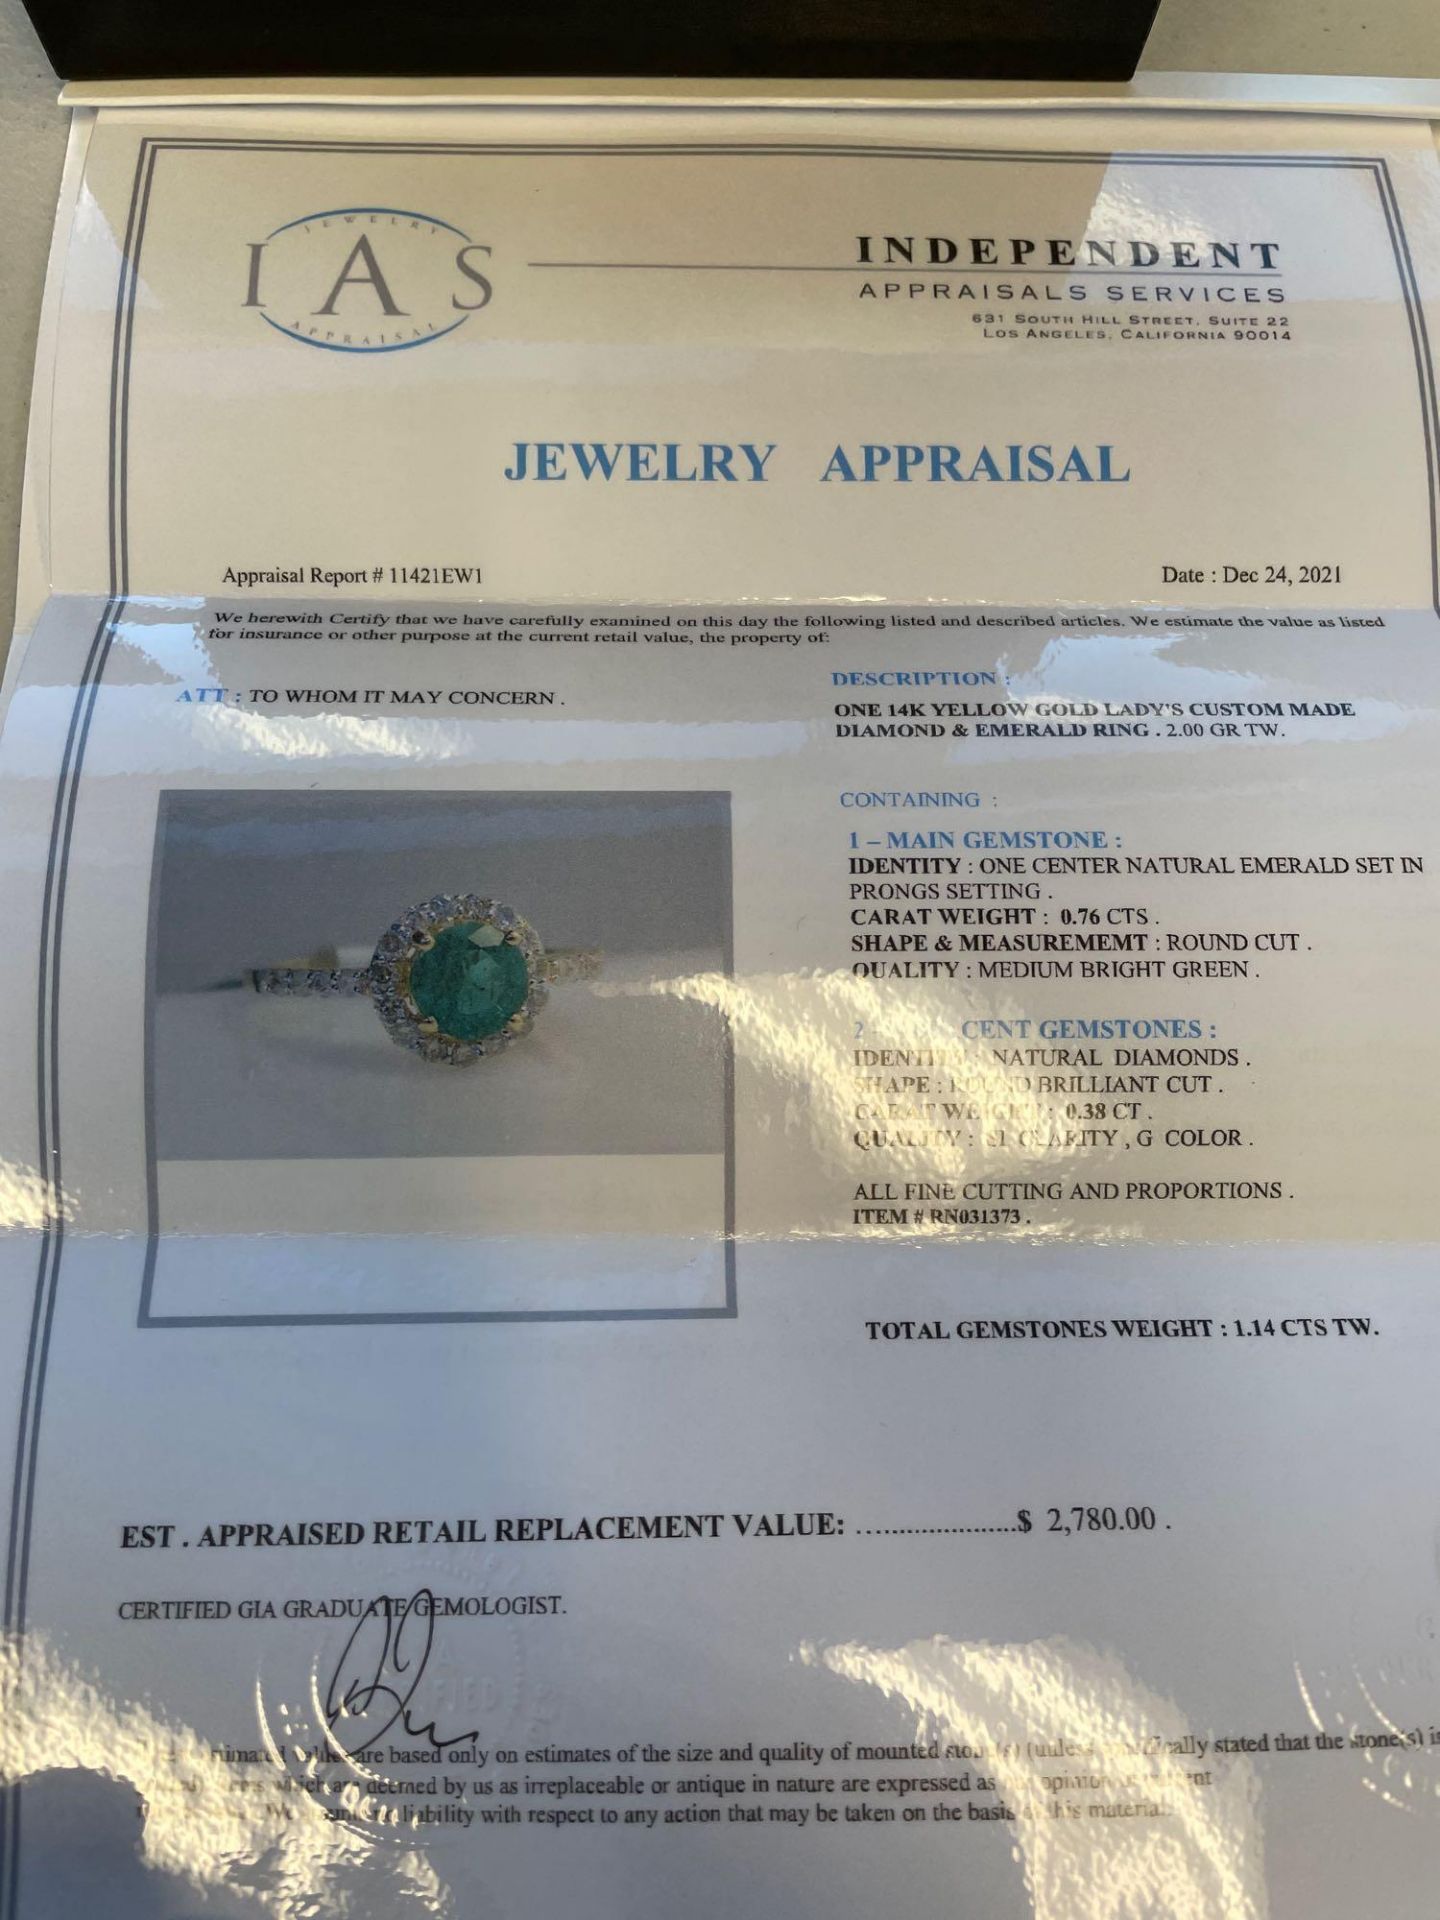 14k Yellow Gold Lady's Custom Made Diamond & Emerald Ring 2.0 gr TW - Image 3 of 5